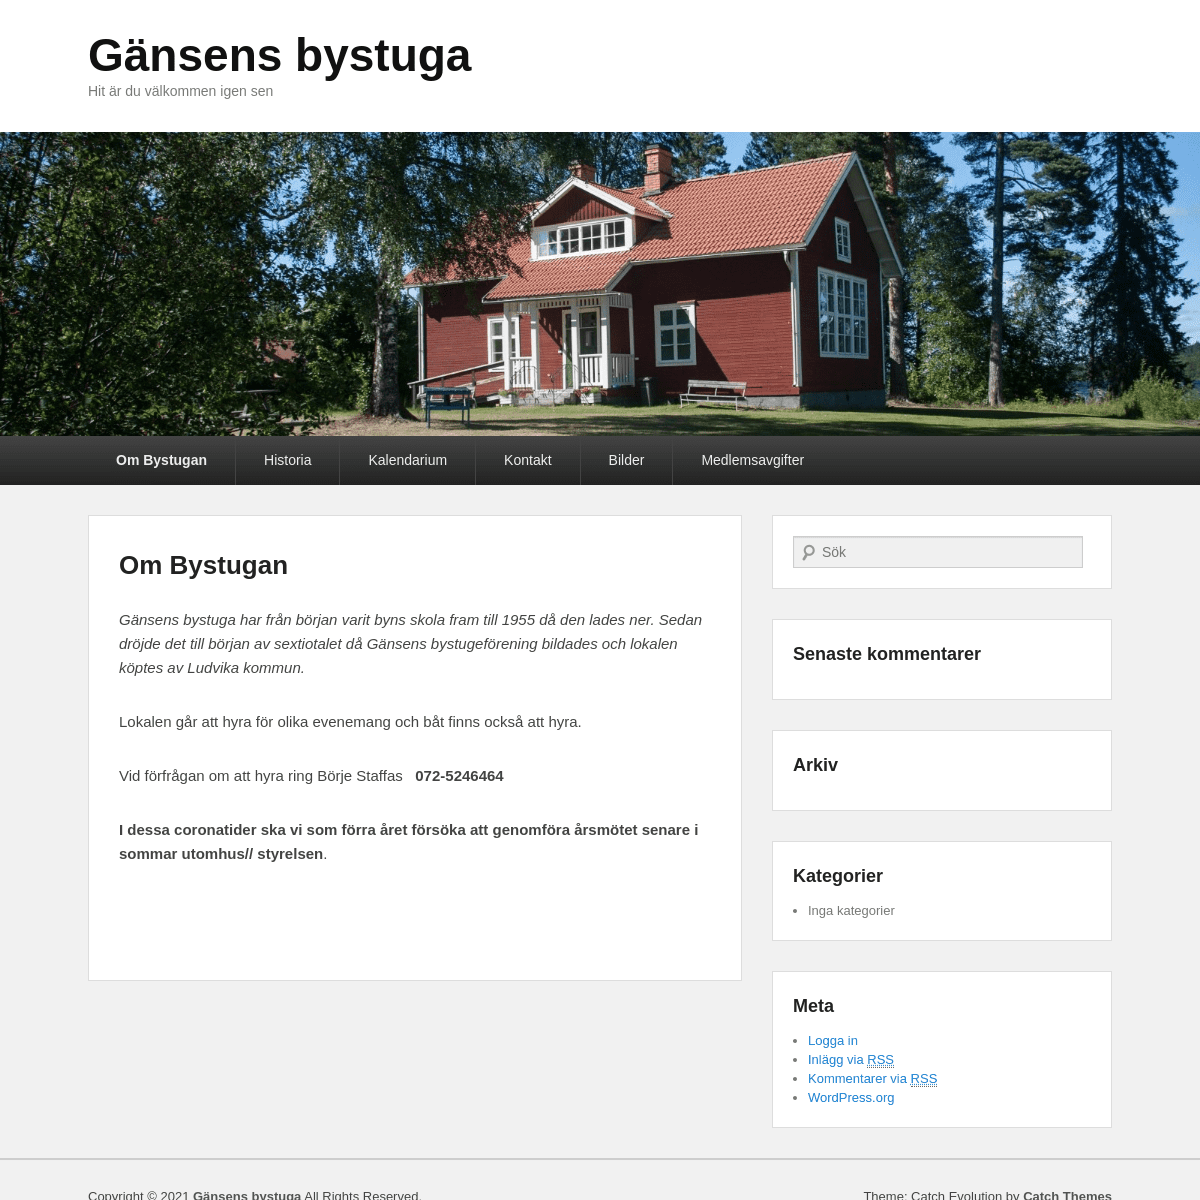 A complete backup of https://gansensbystuga.se